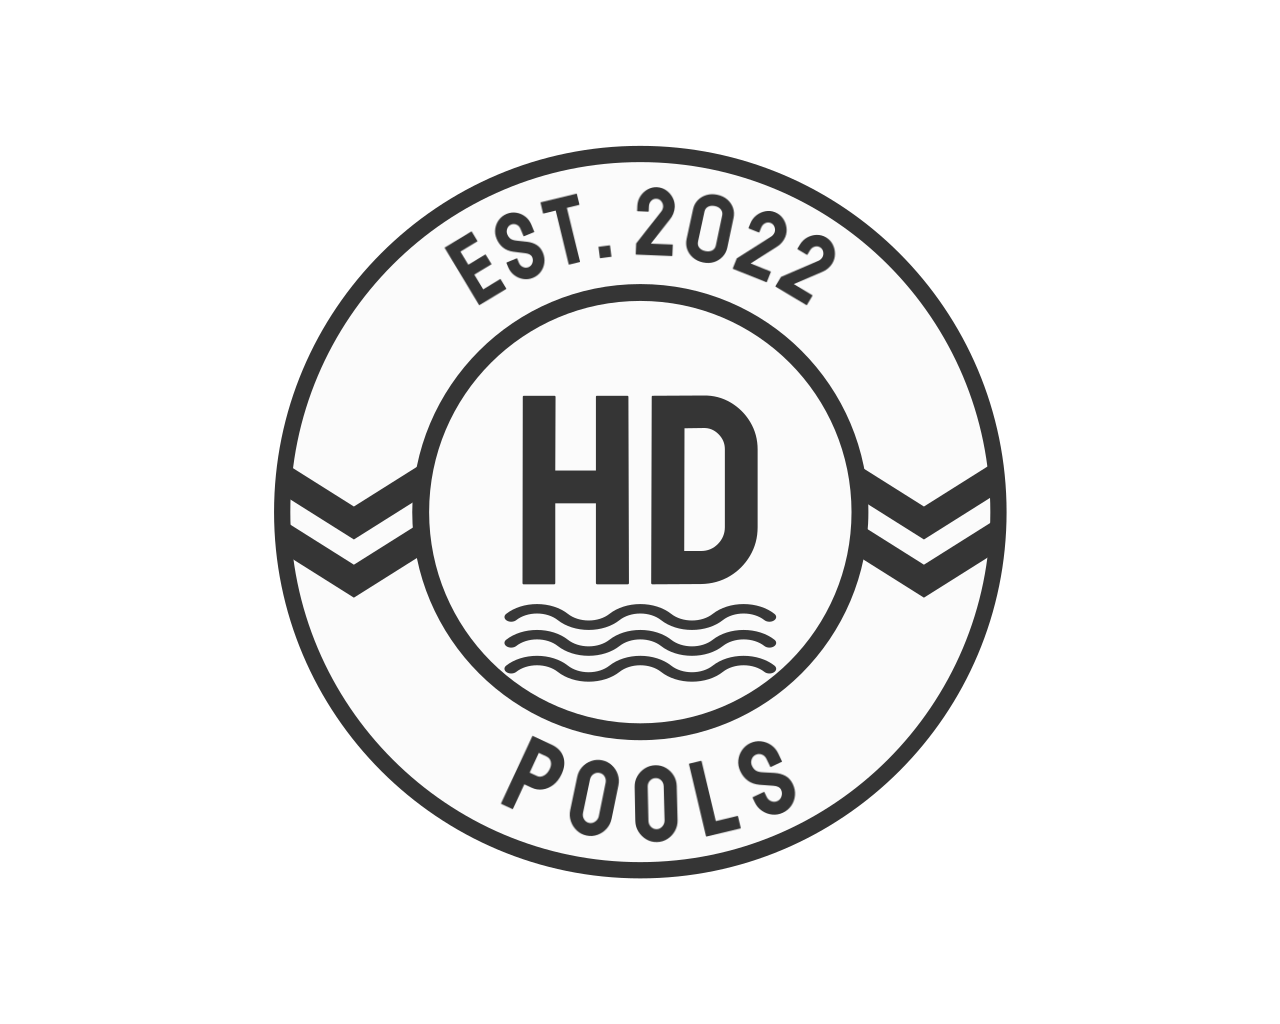 HDPools 's web page